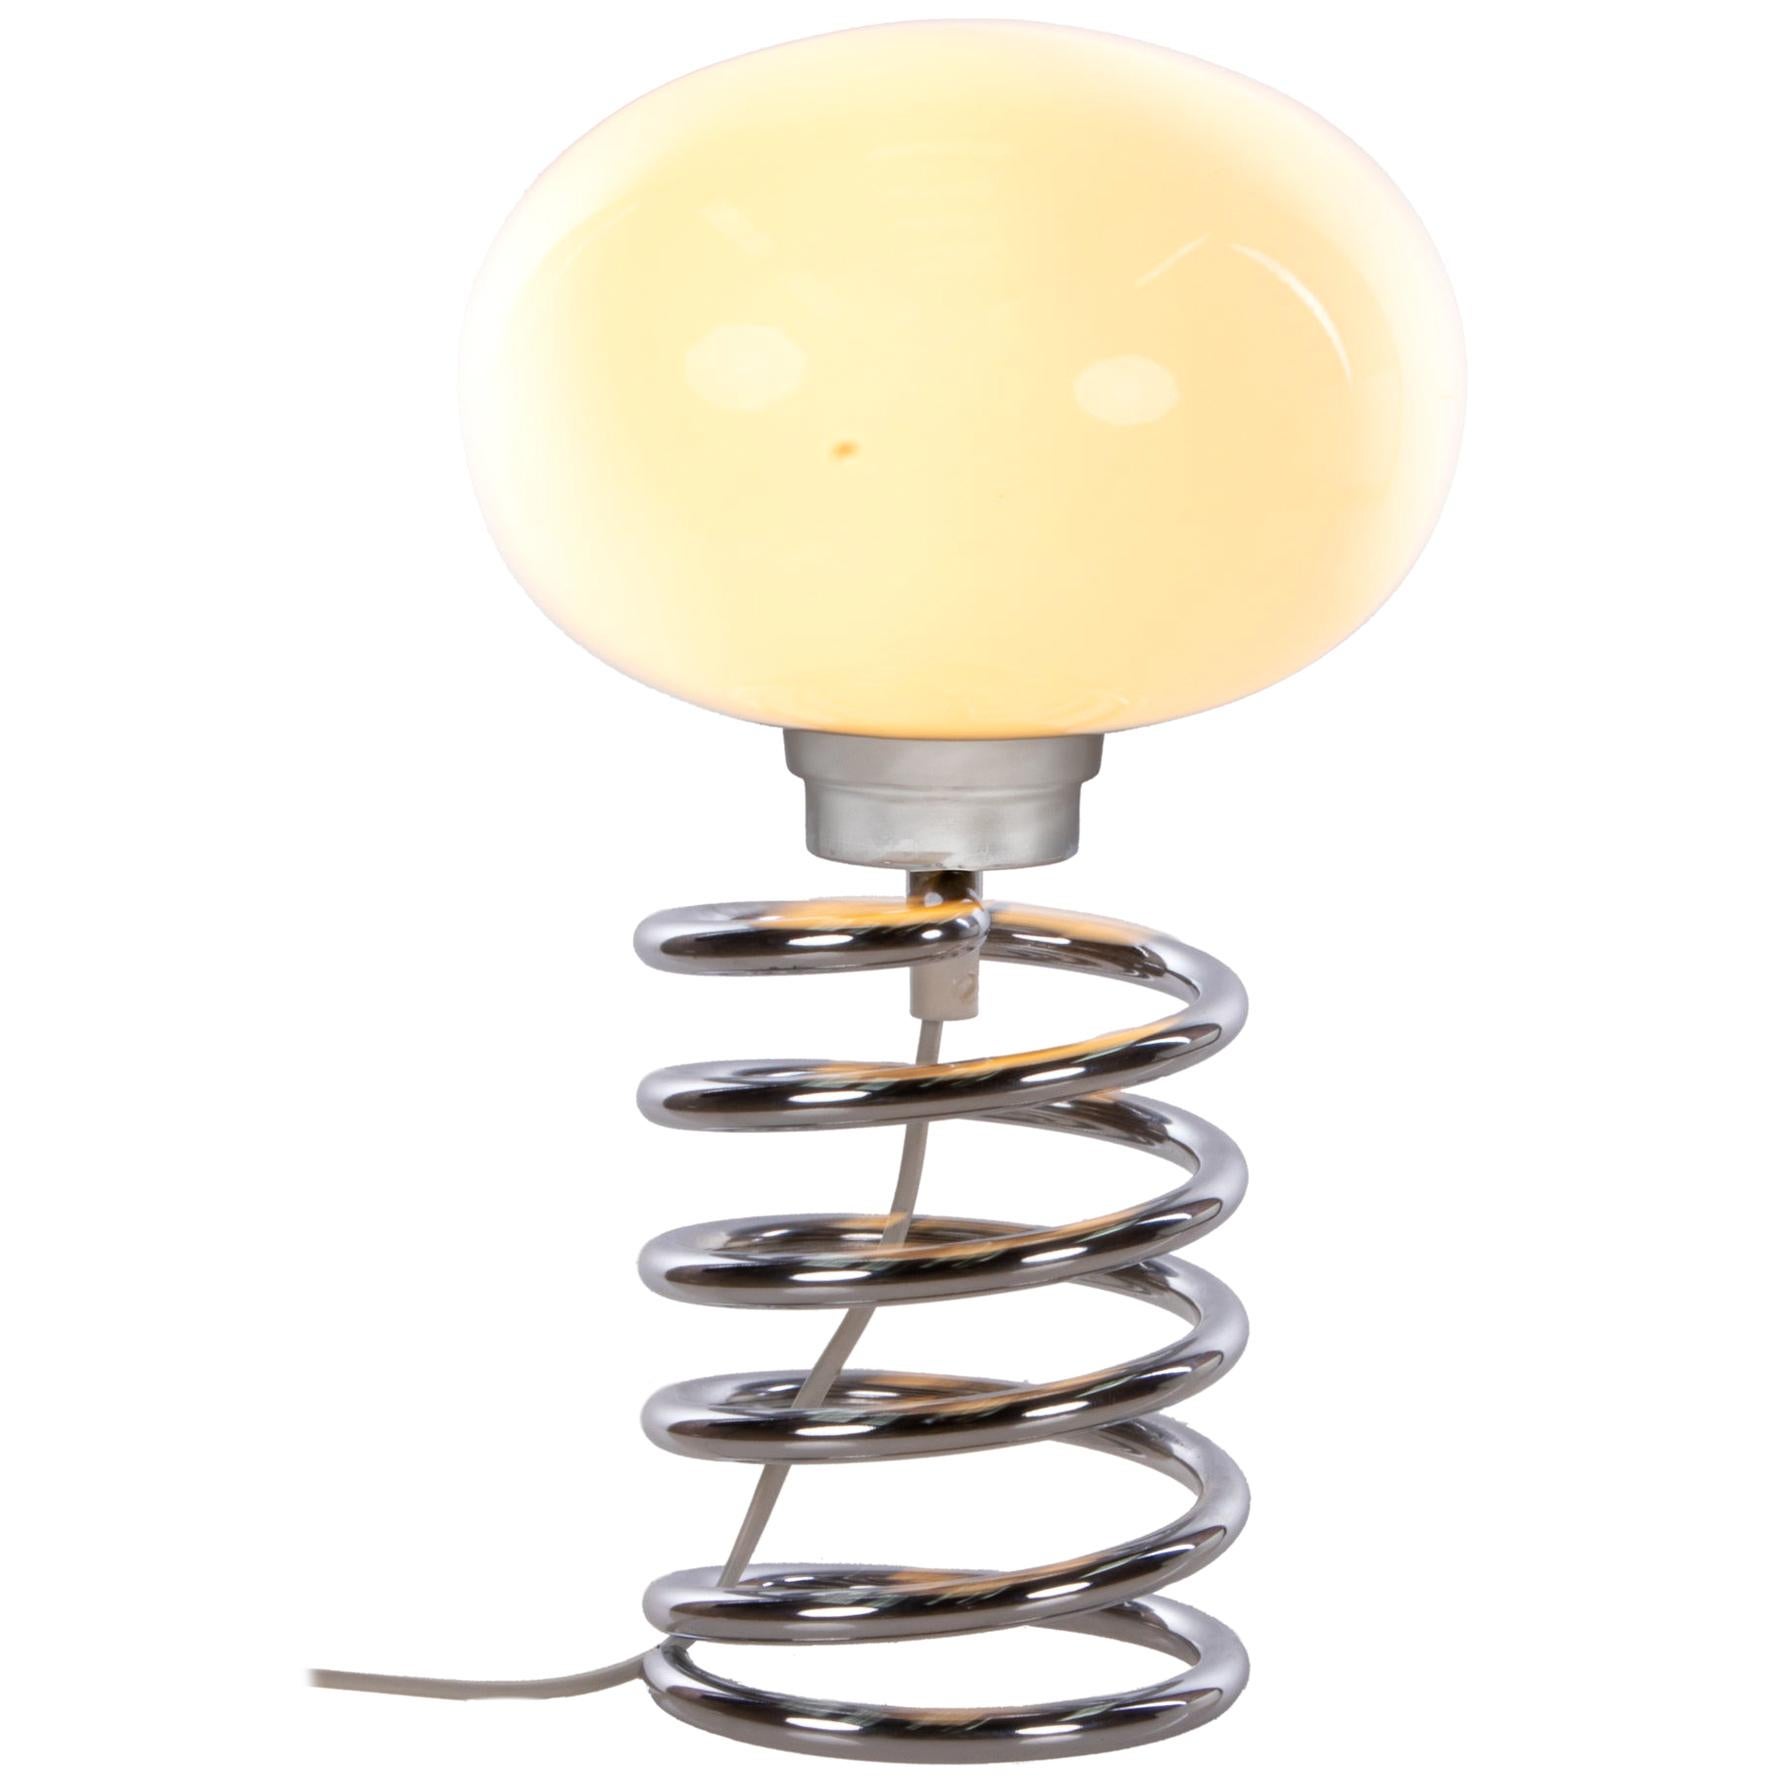 1965 Design M Ingo Maurer Petite lampe à poser 'Spirale' verre et chrome